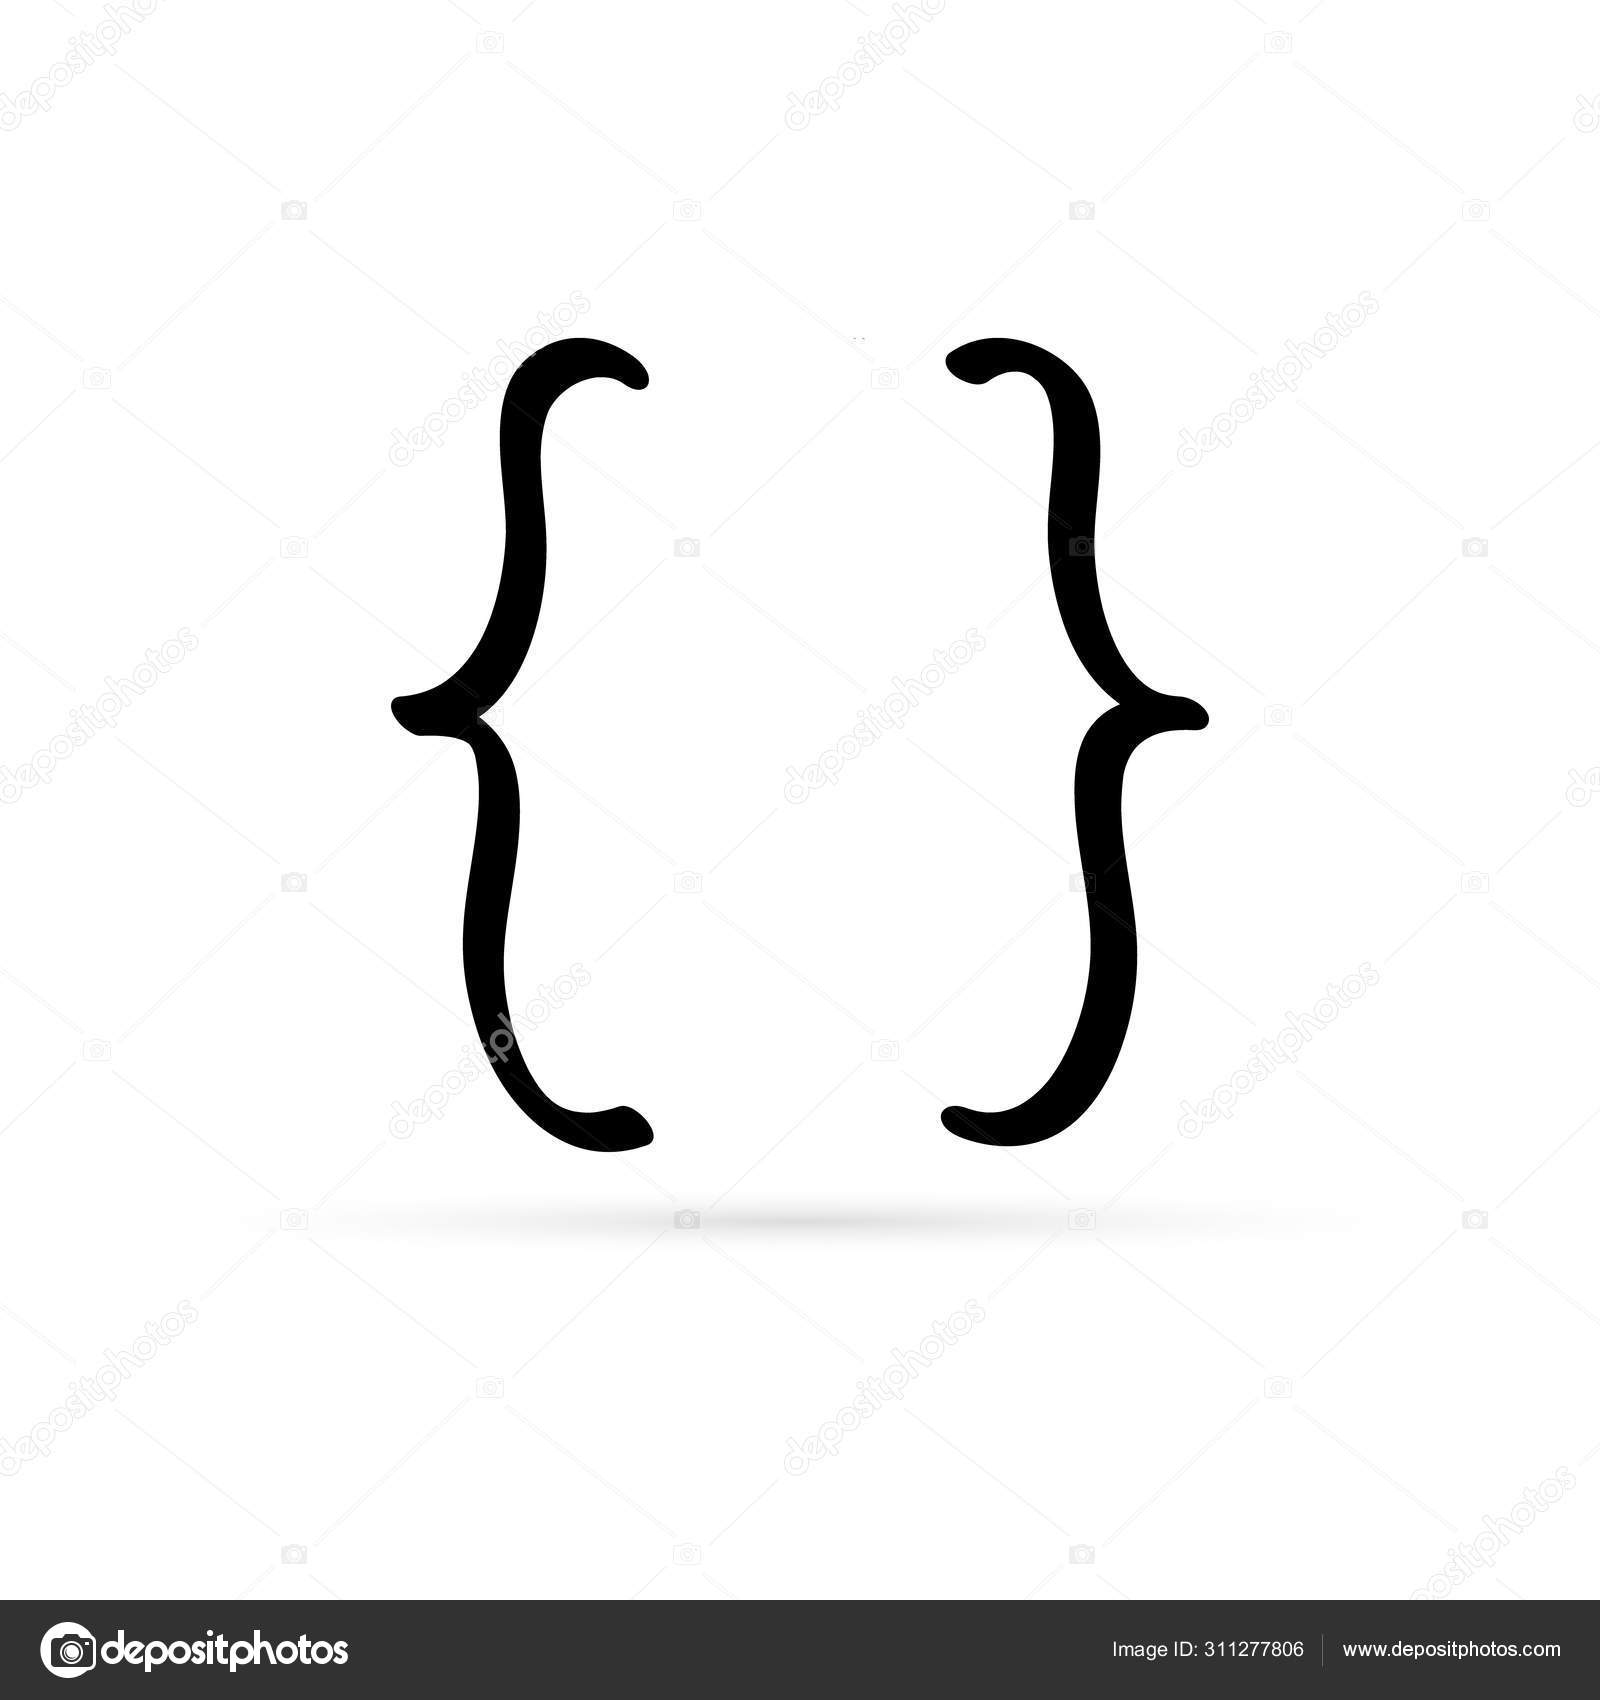 https://st4.depositphotos.com/8564750/31127/v/1600/depositphotos_311277806-stock-illustration-doodle-linear-math-brace-line.jpg